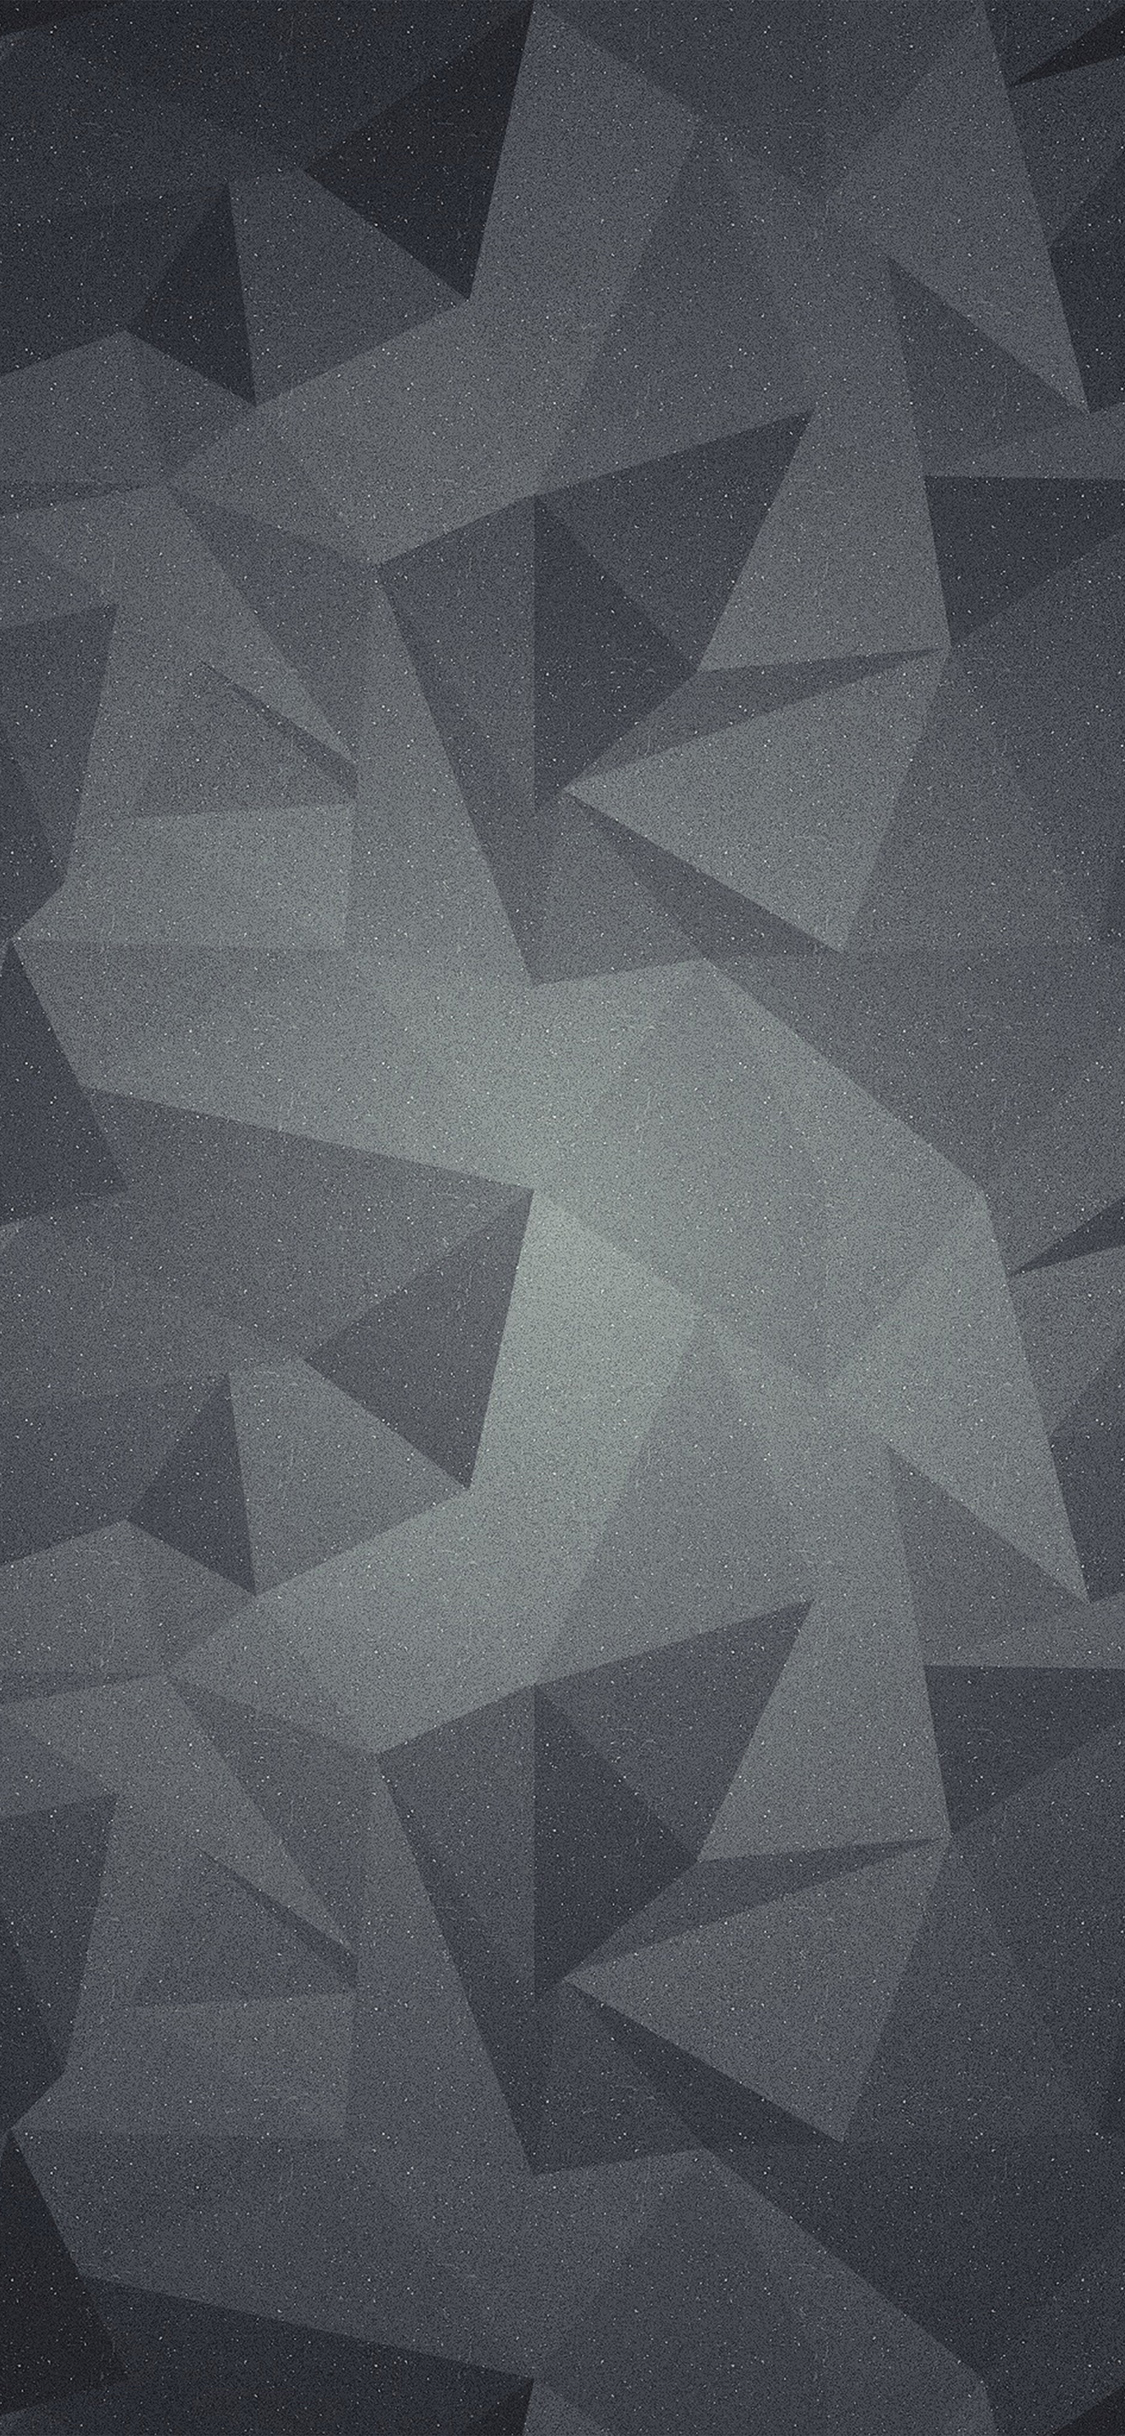 iPhone X wallpaper. abstract polygon dark